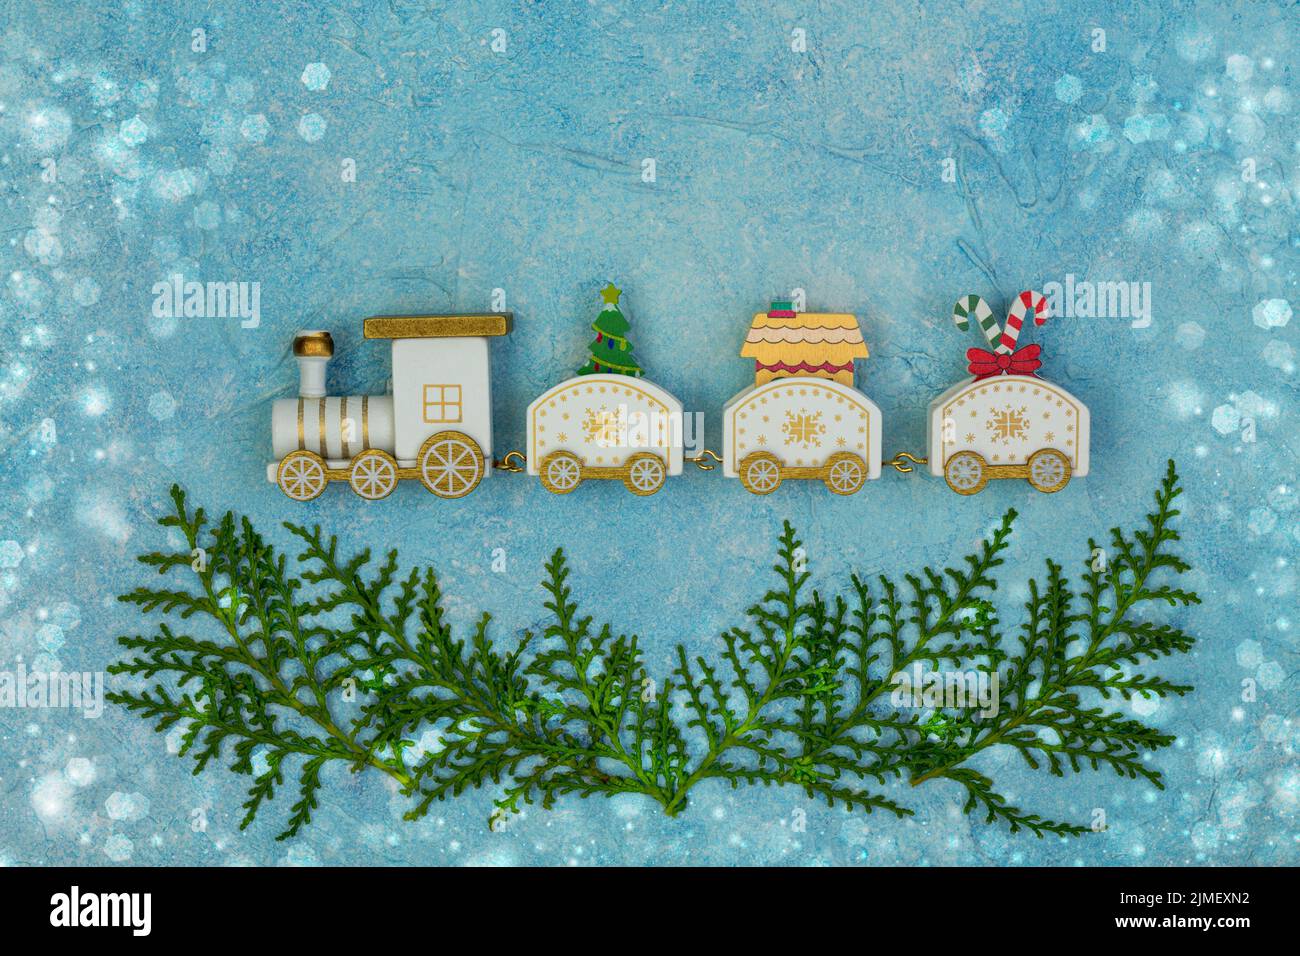 Christmas card with a miniature train. Stock Photo